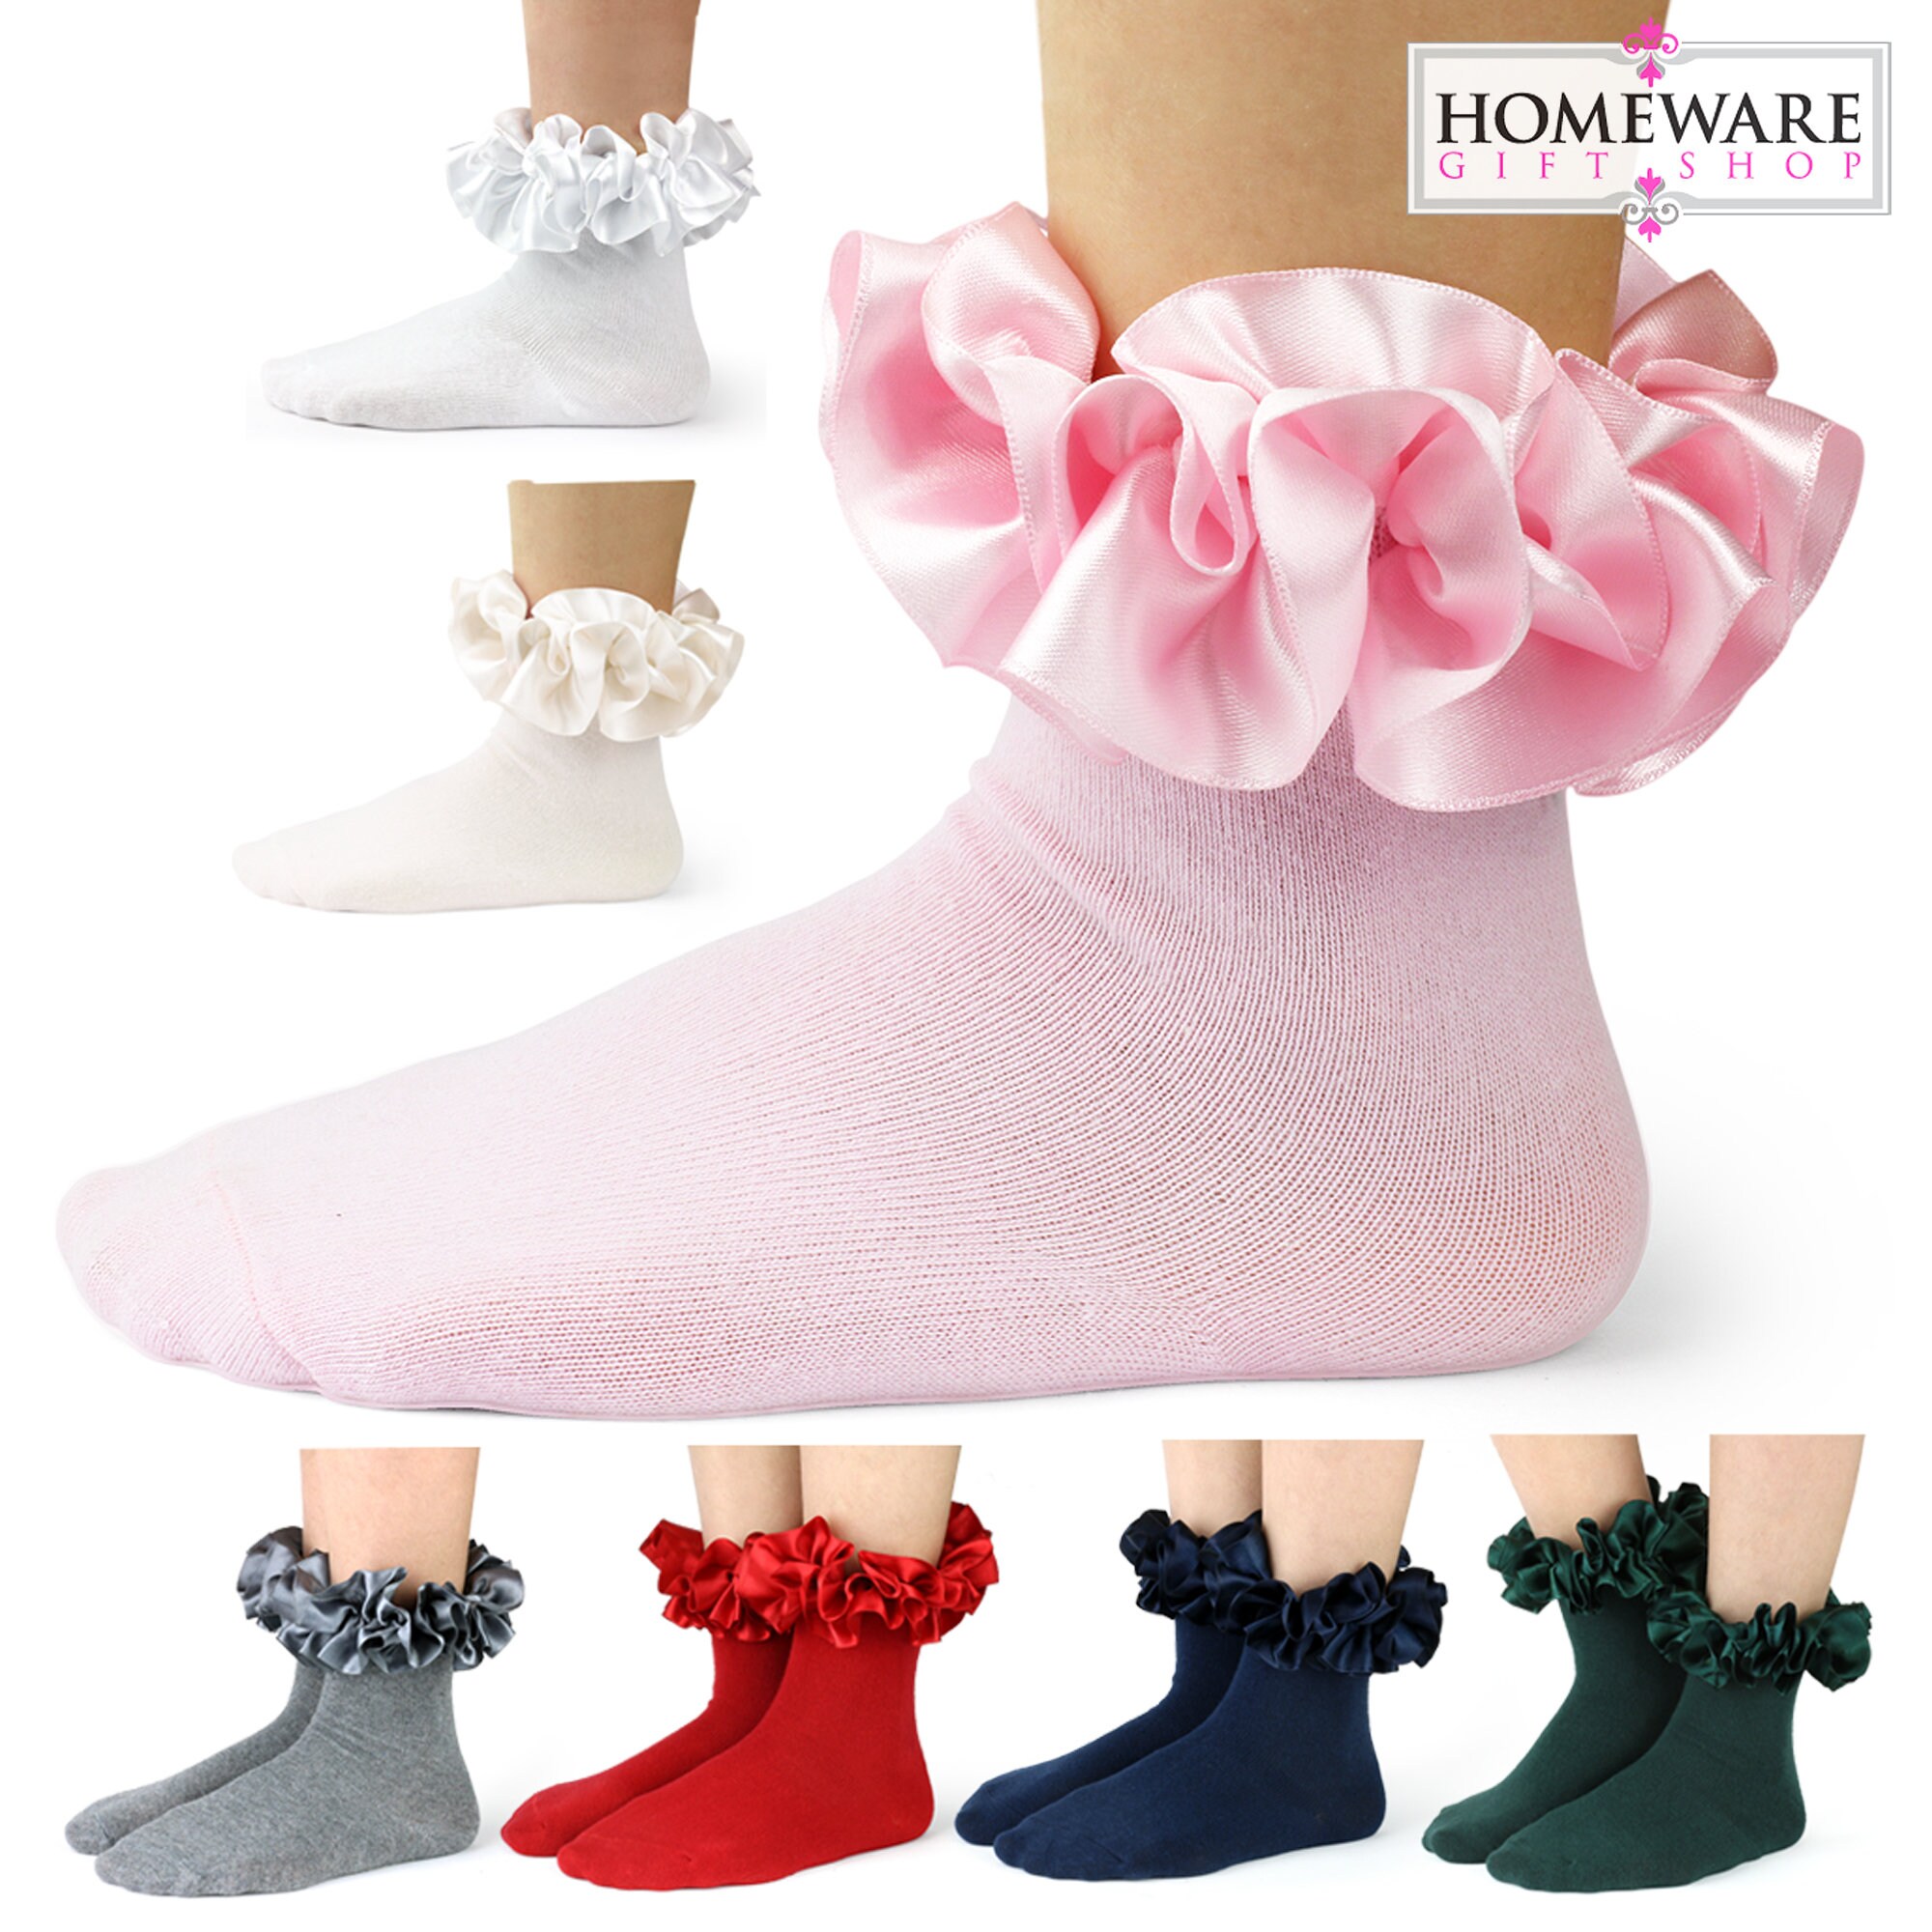 Personalised Flower Girl Socks, Name on Ankle Socks, White, Pink or Blue,  Girls Custom Made Gift Wedding Socks Lace Trim, Child Clothing 